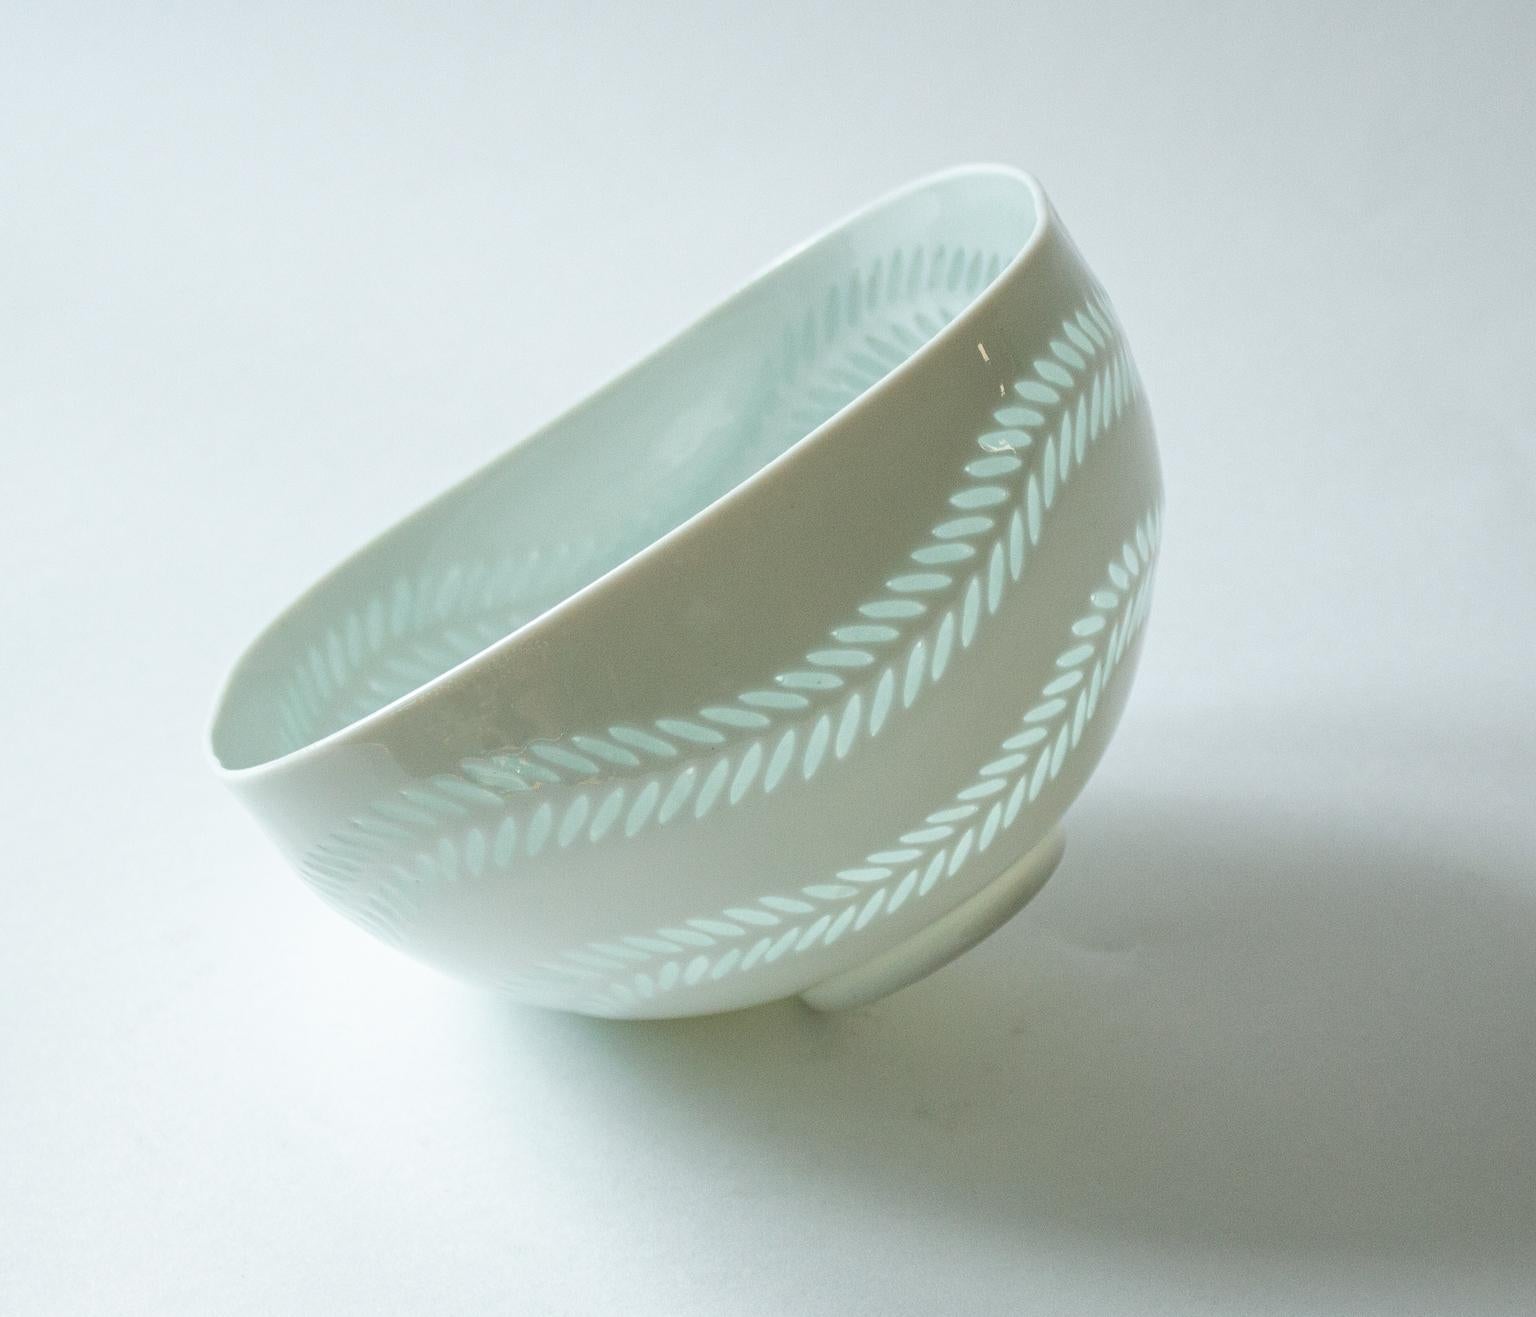 Scandinavian Modern oval rice grain porcelain bowl by Friedl Holzer-Kjellberg for Arabia in Finland.
A delicate 